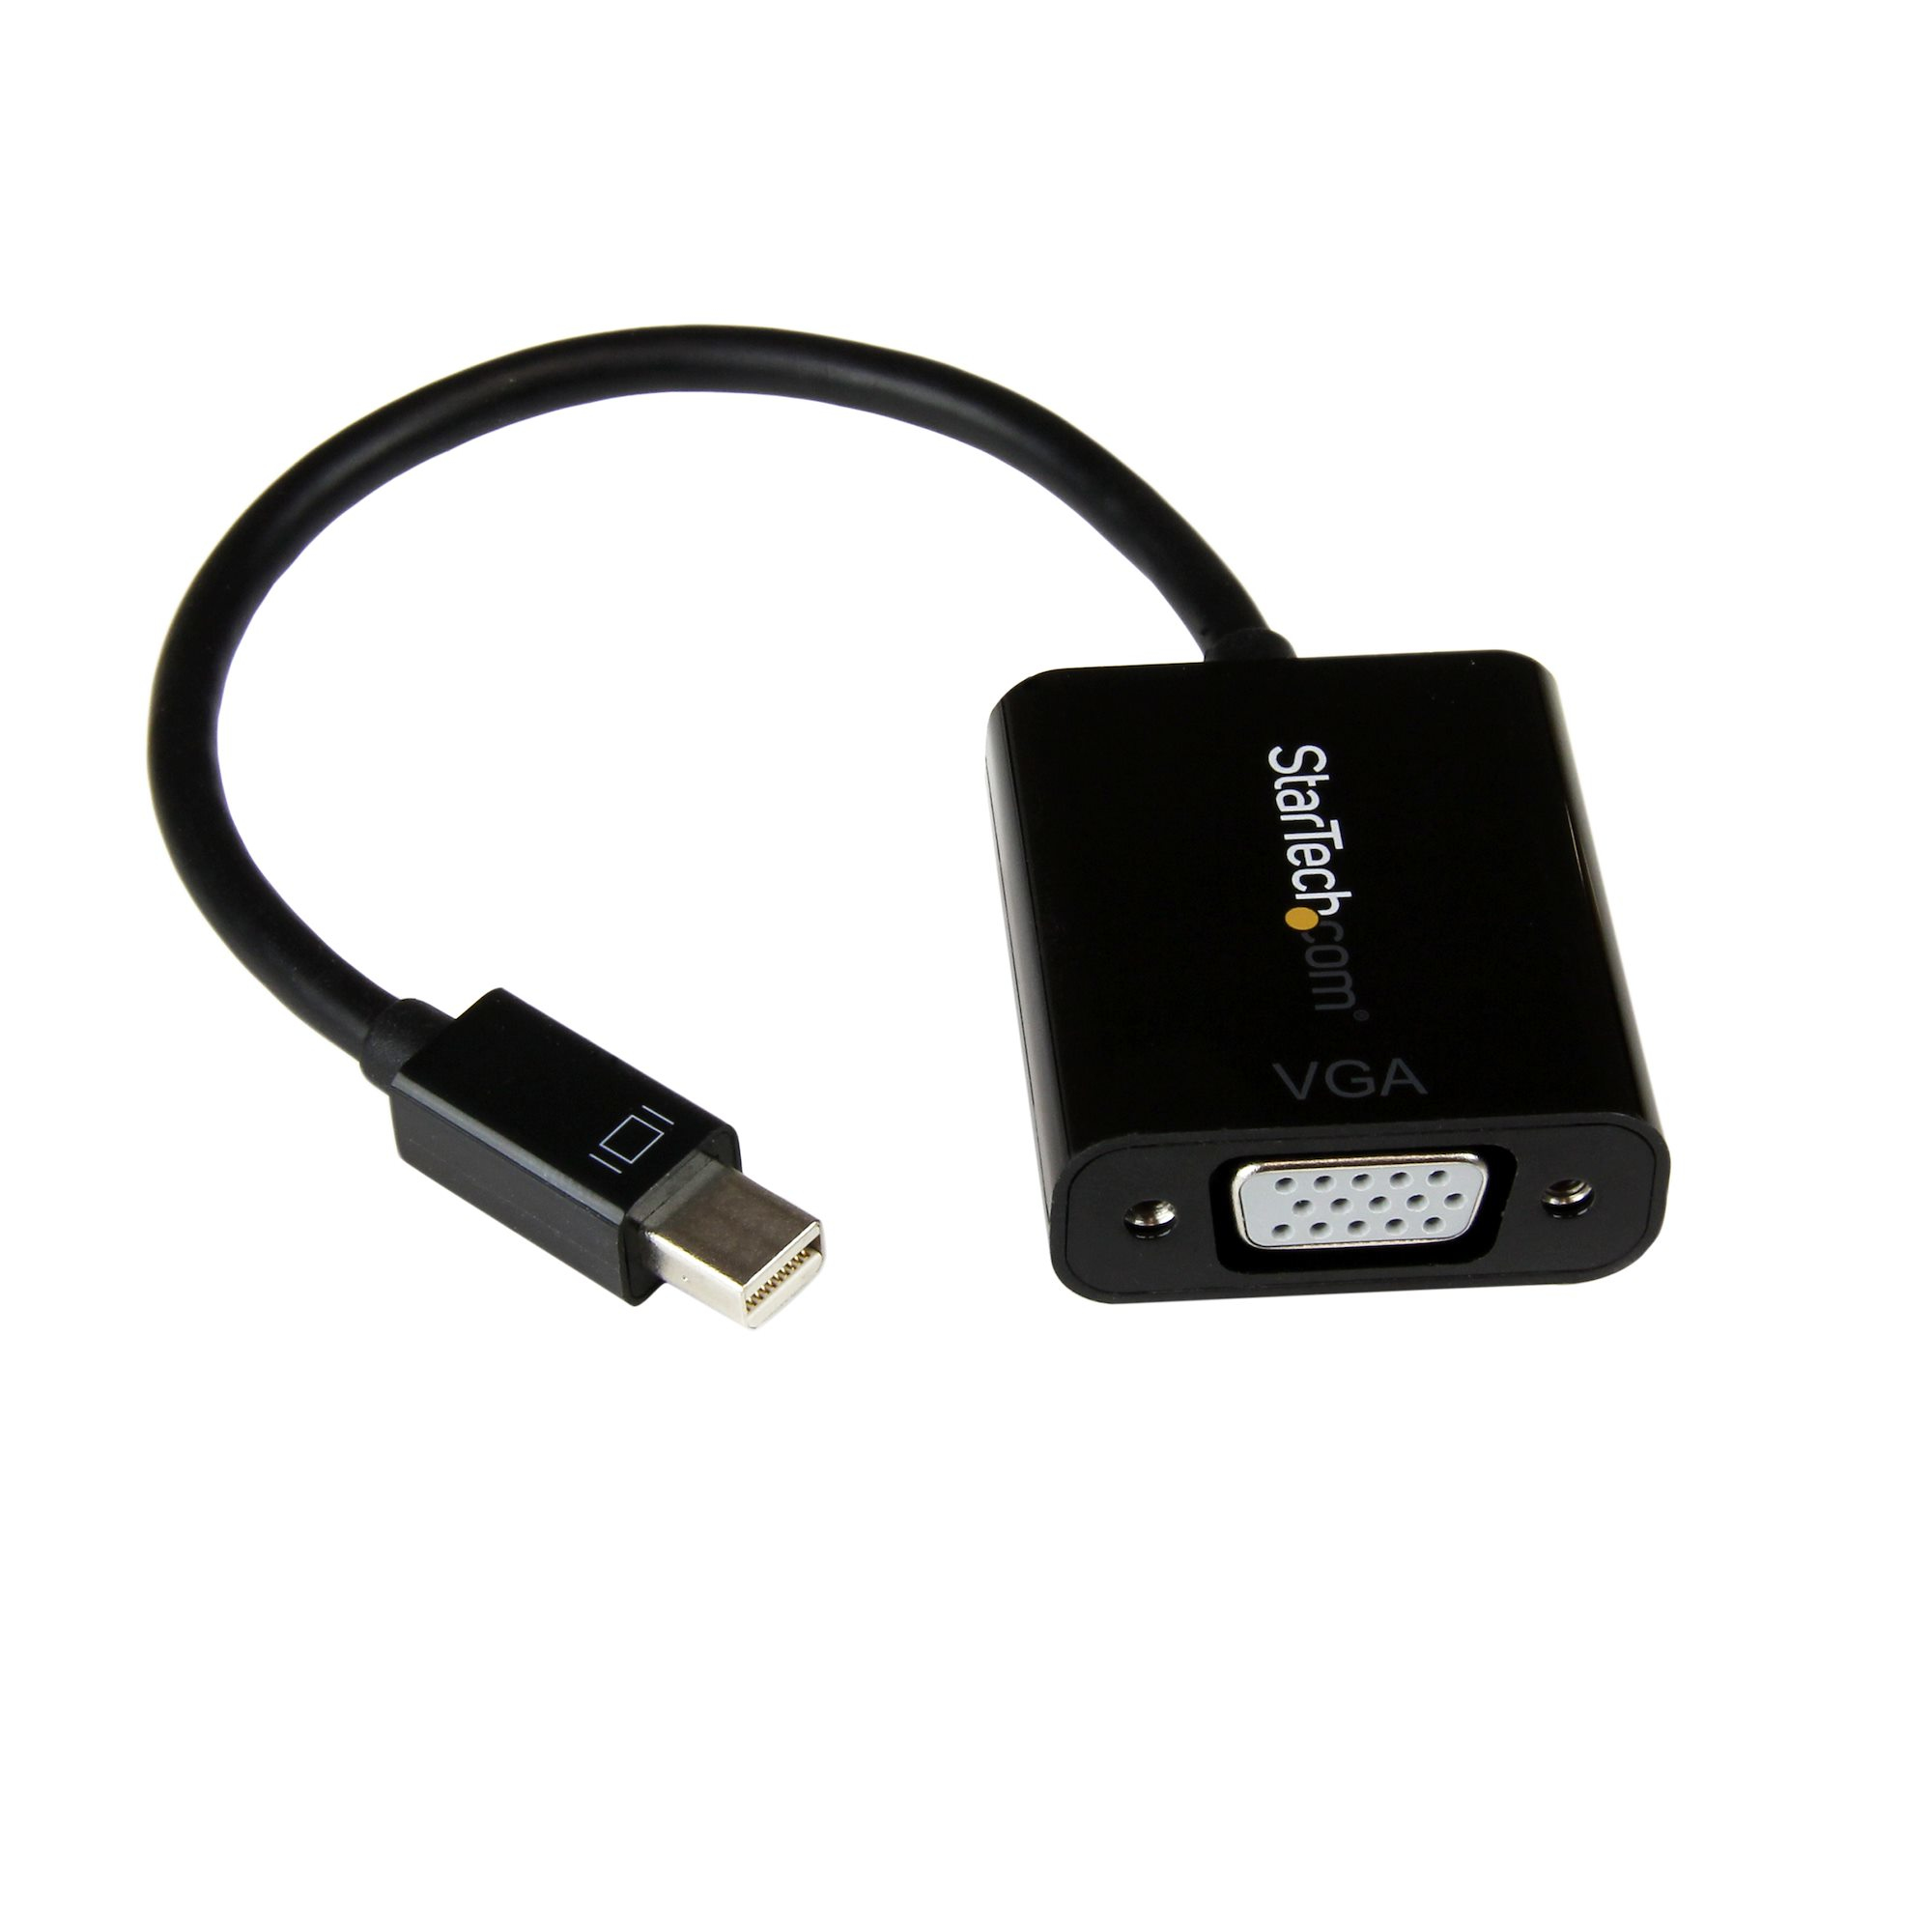 StarTech.com Mini DisplayPort to VGA Adapter - Active Mini DP to VGA Converter - 1080p Video - mDP or Thunderbolt 1/2 Mac/PC to VGA Monitor/Projector/Display - mDP 1.2 to VGA Dongle - Black